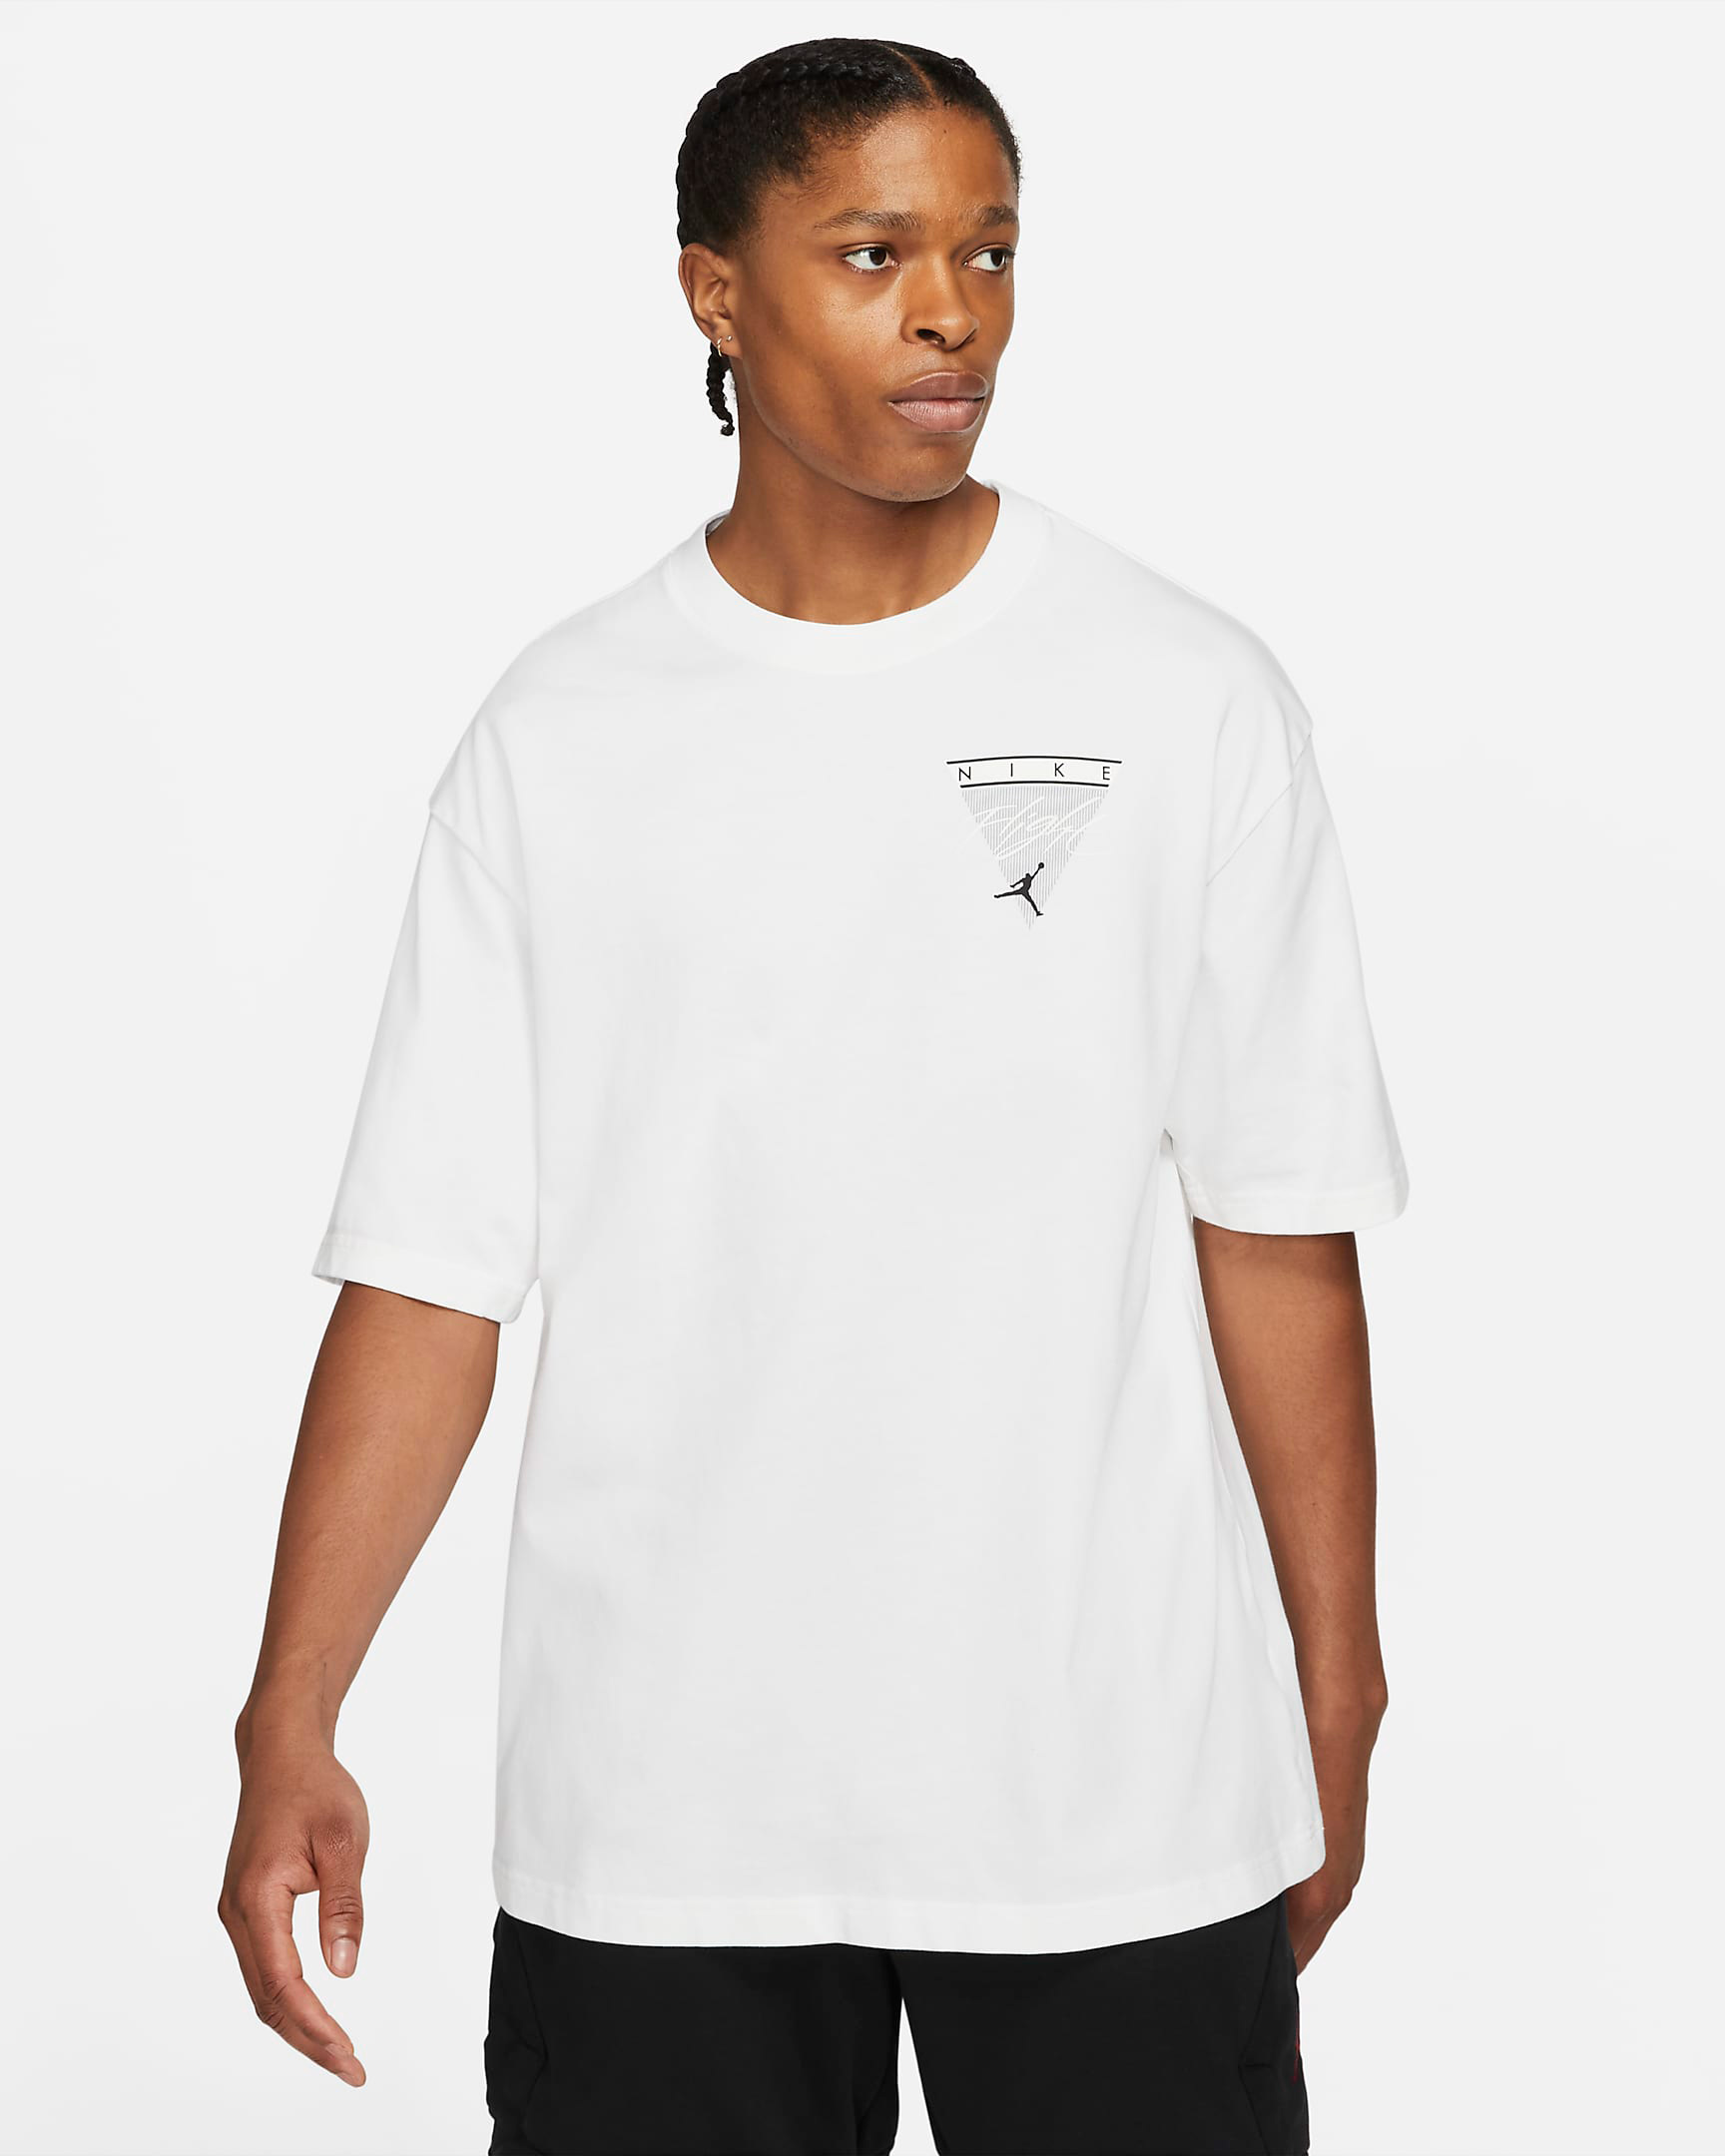 jordan-4-white-oreo-tee-shirt-2